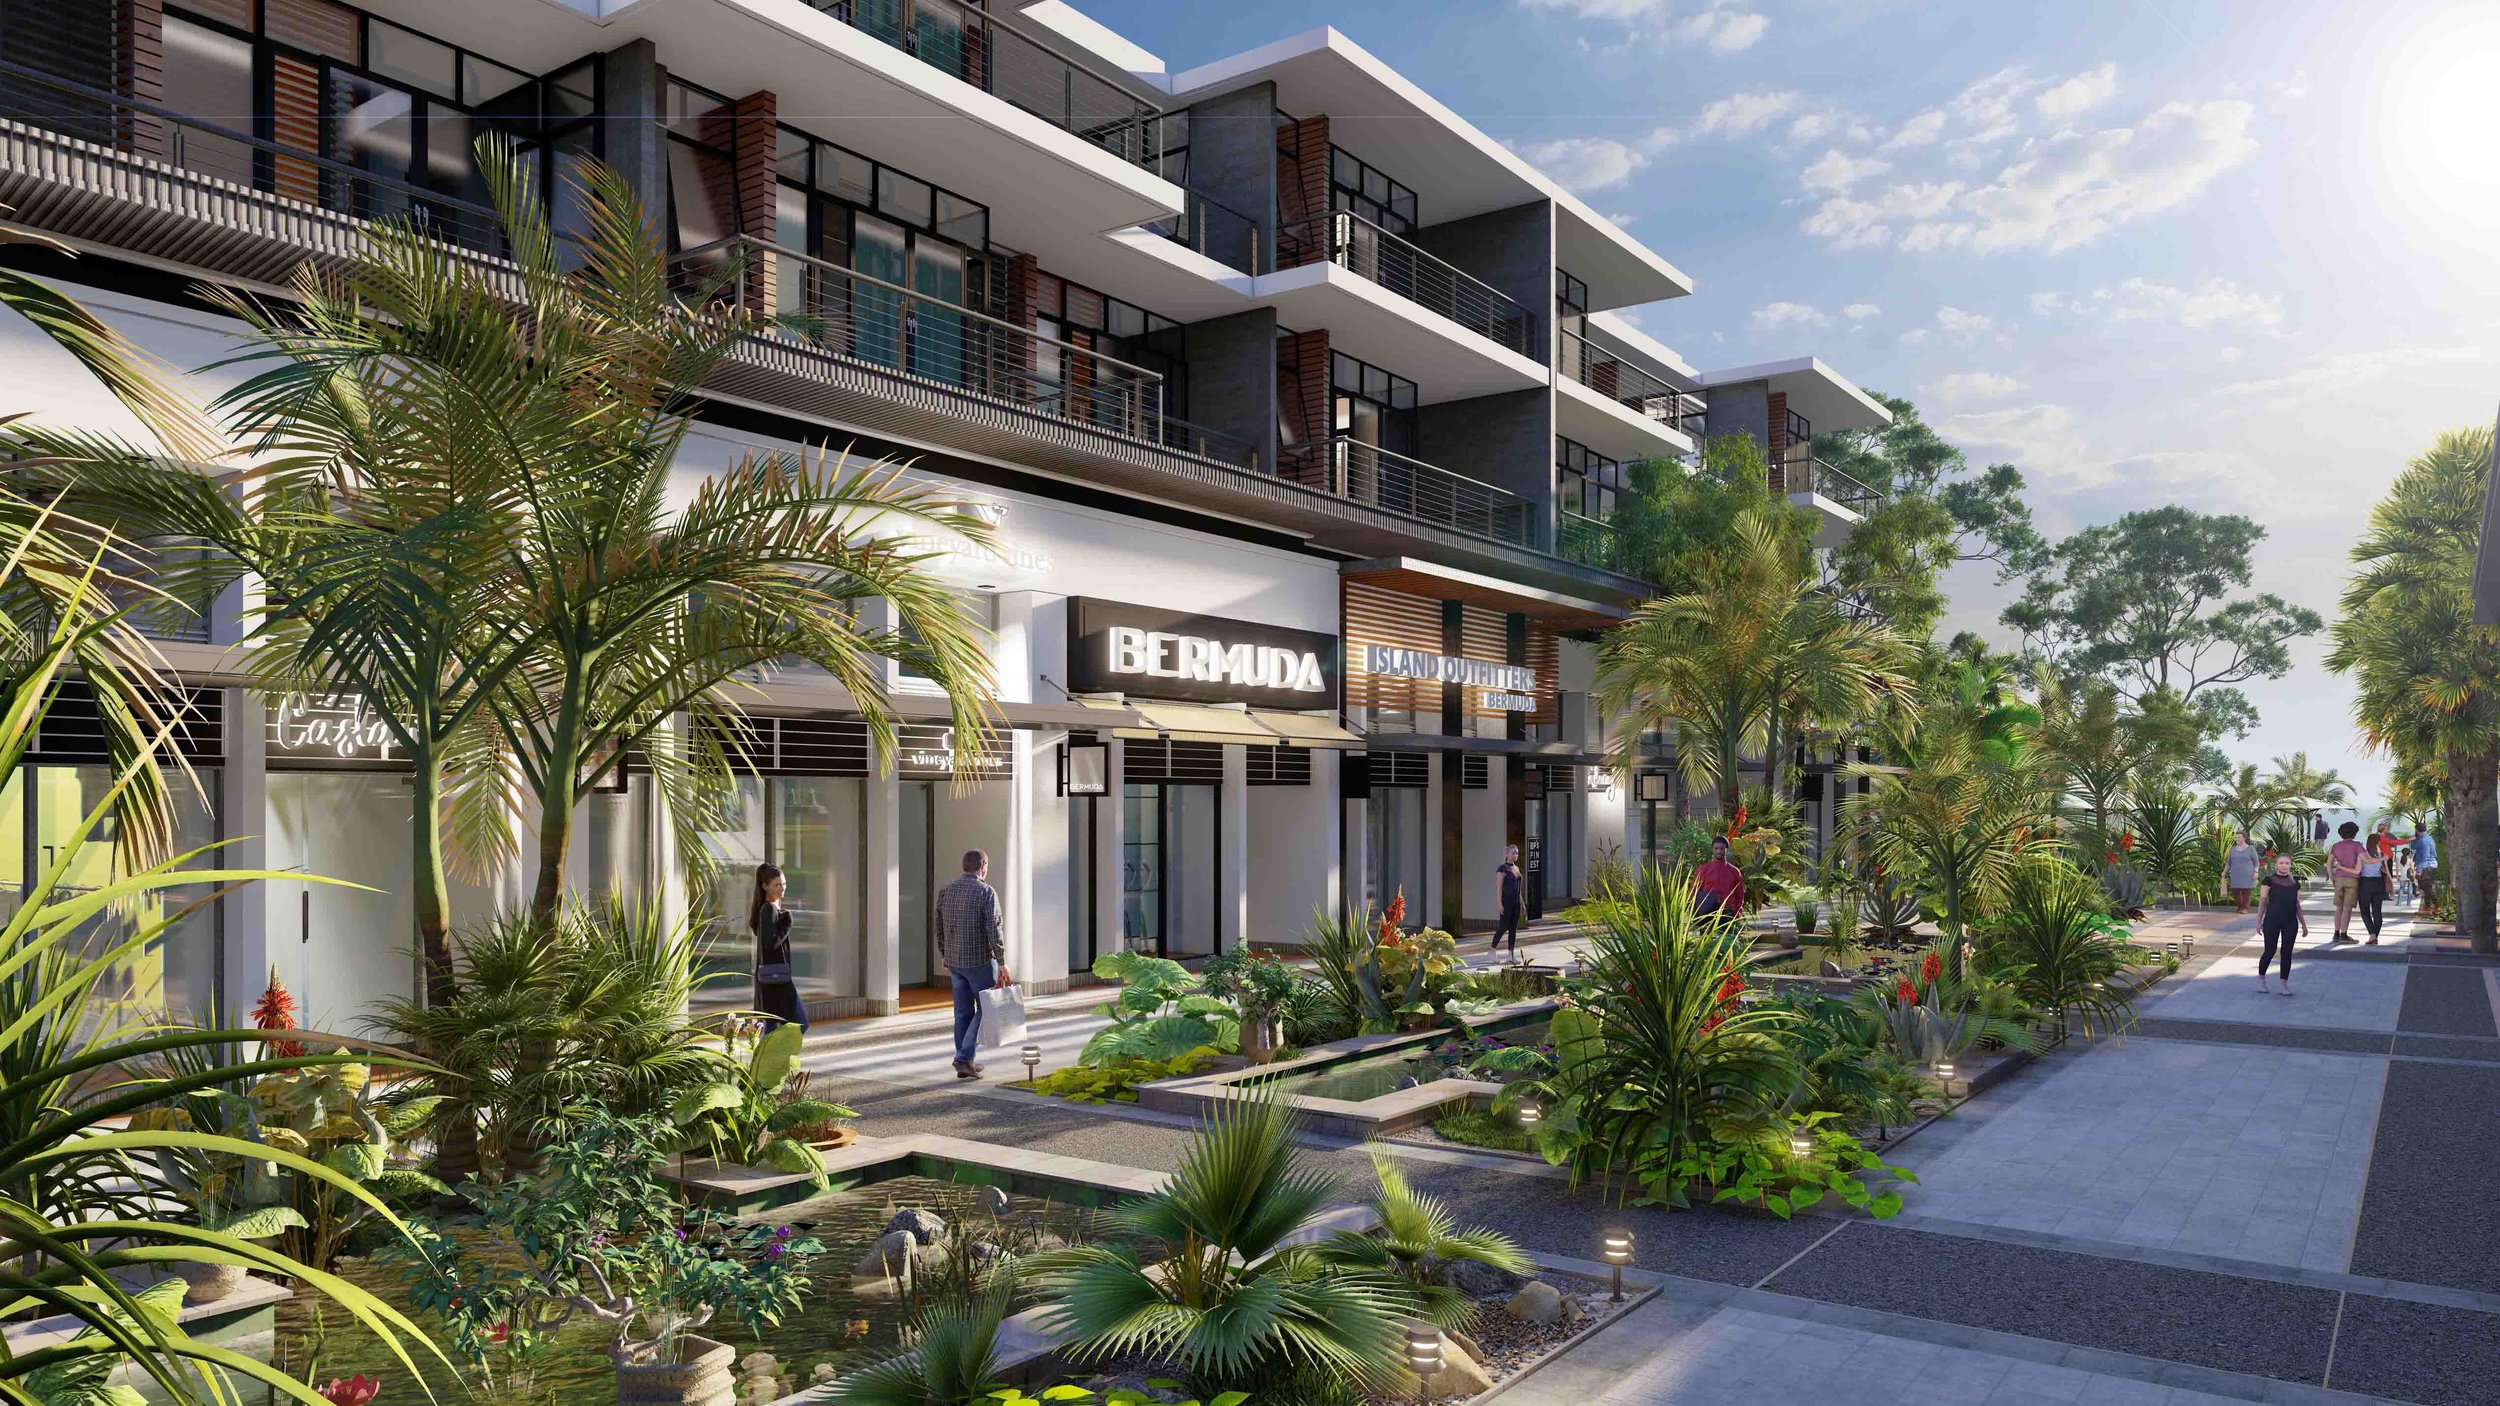  Bermuda Redevelopment project conceptual render. 